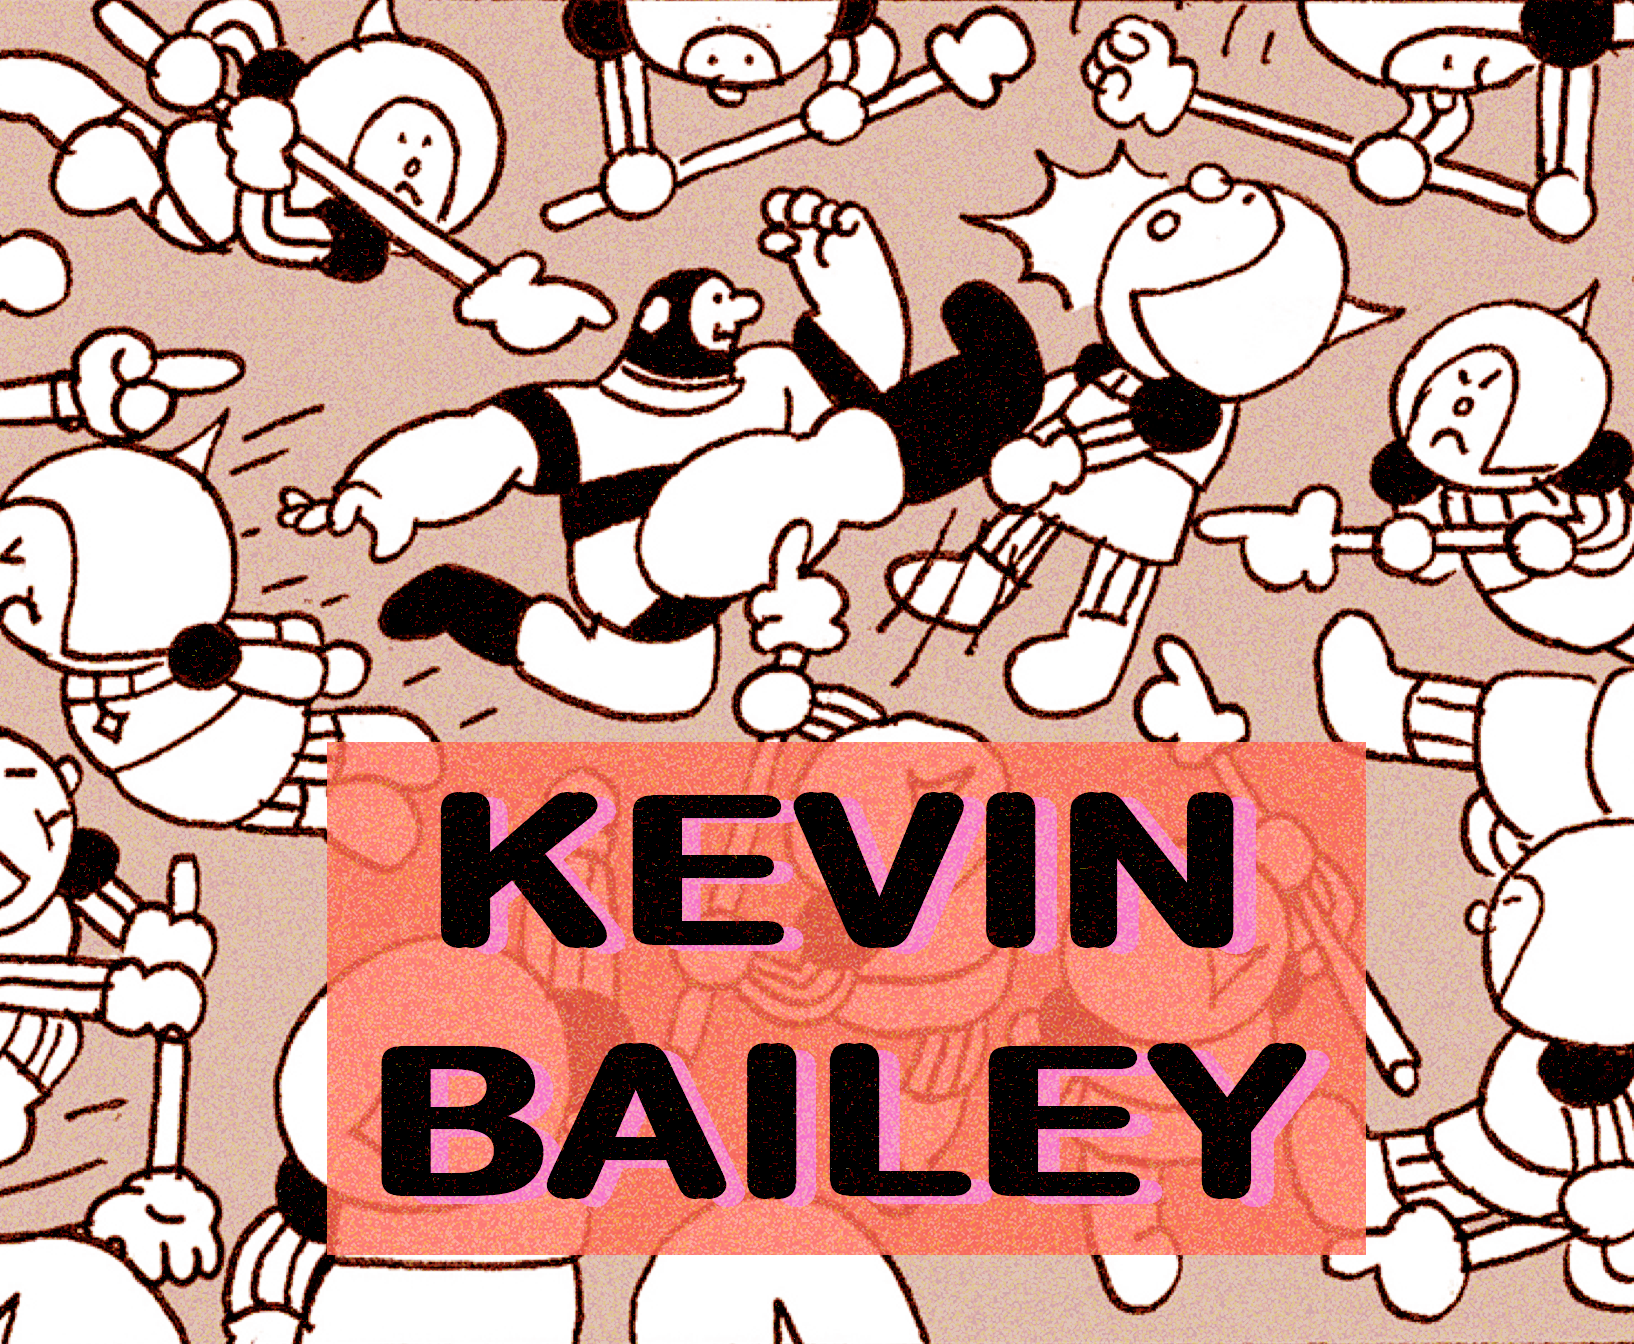 KEVIN BAILEY CARTOONS